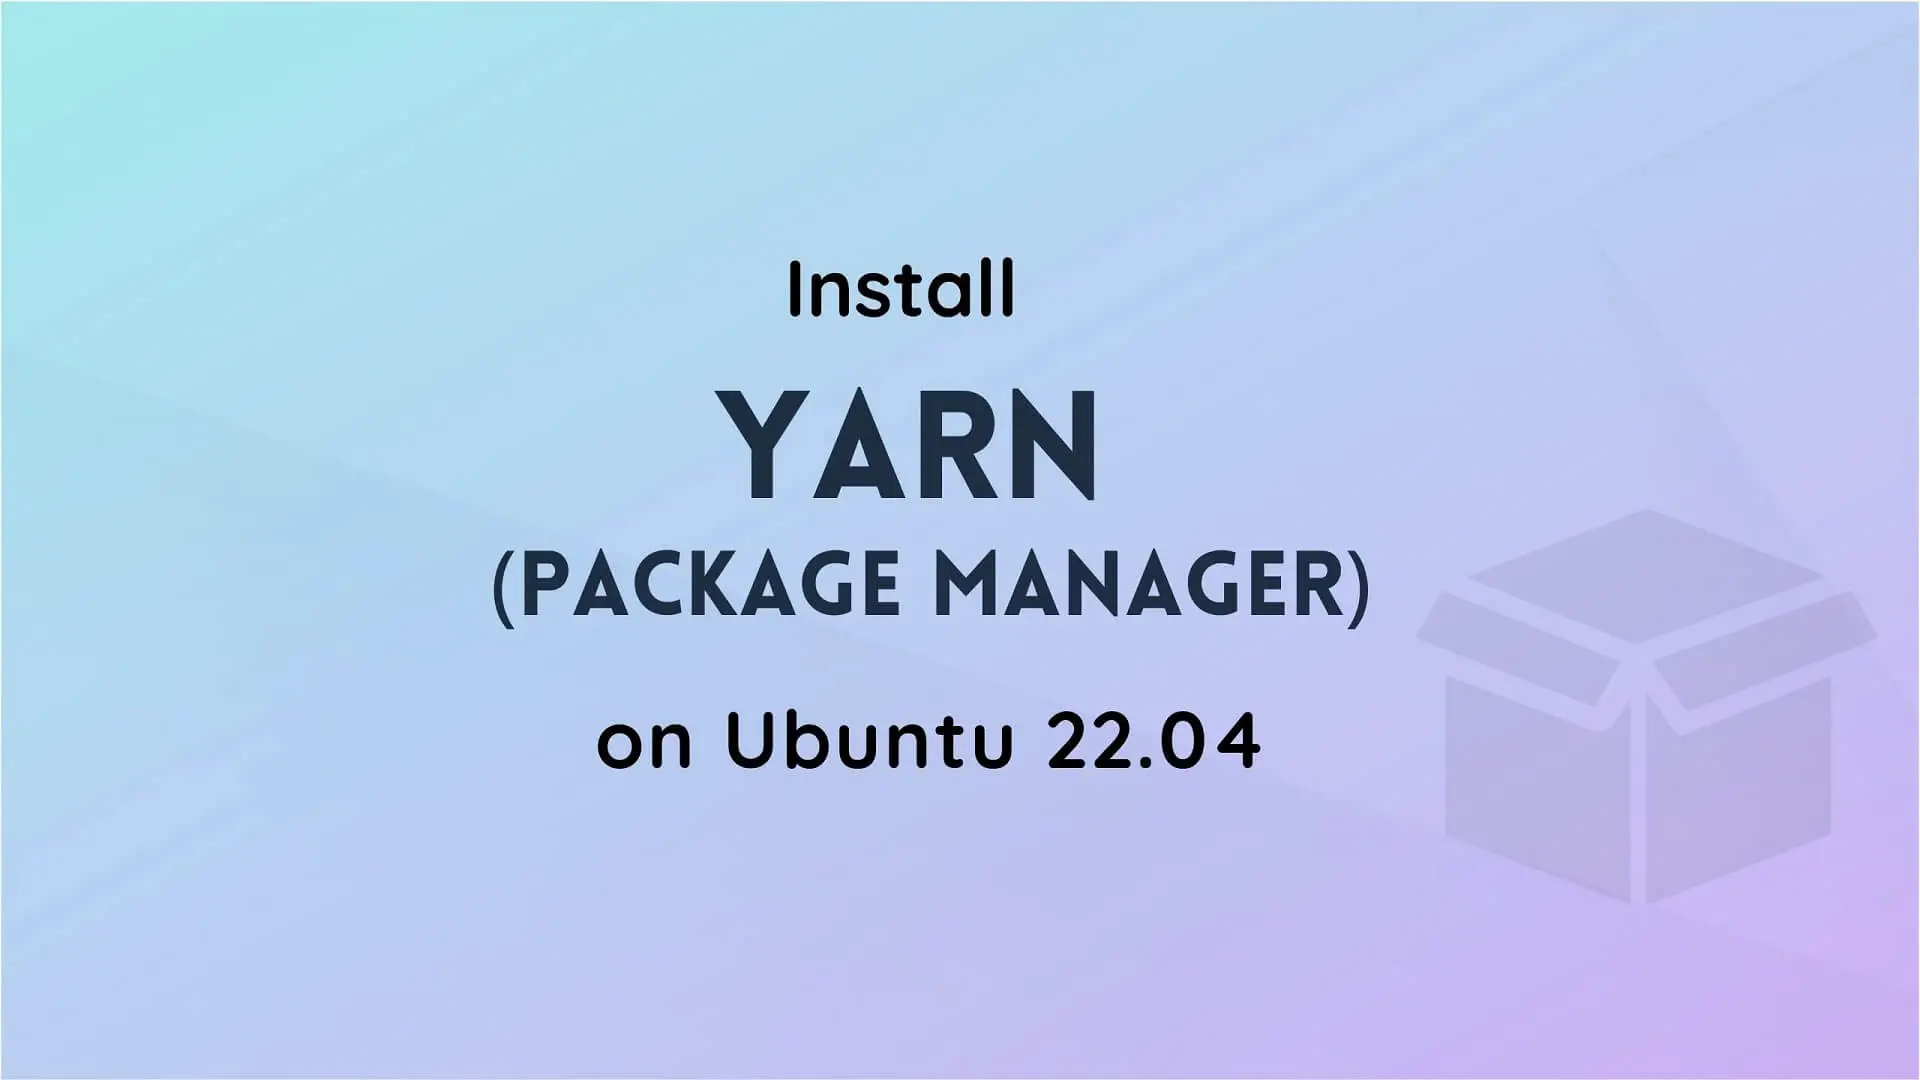 Install Yarn on Ubuntu 22.04